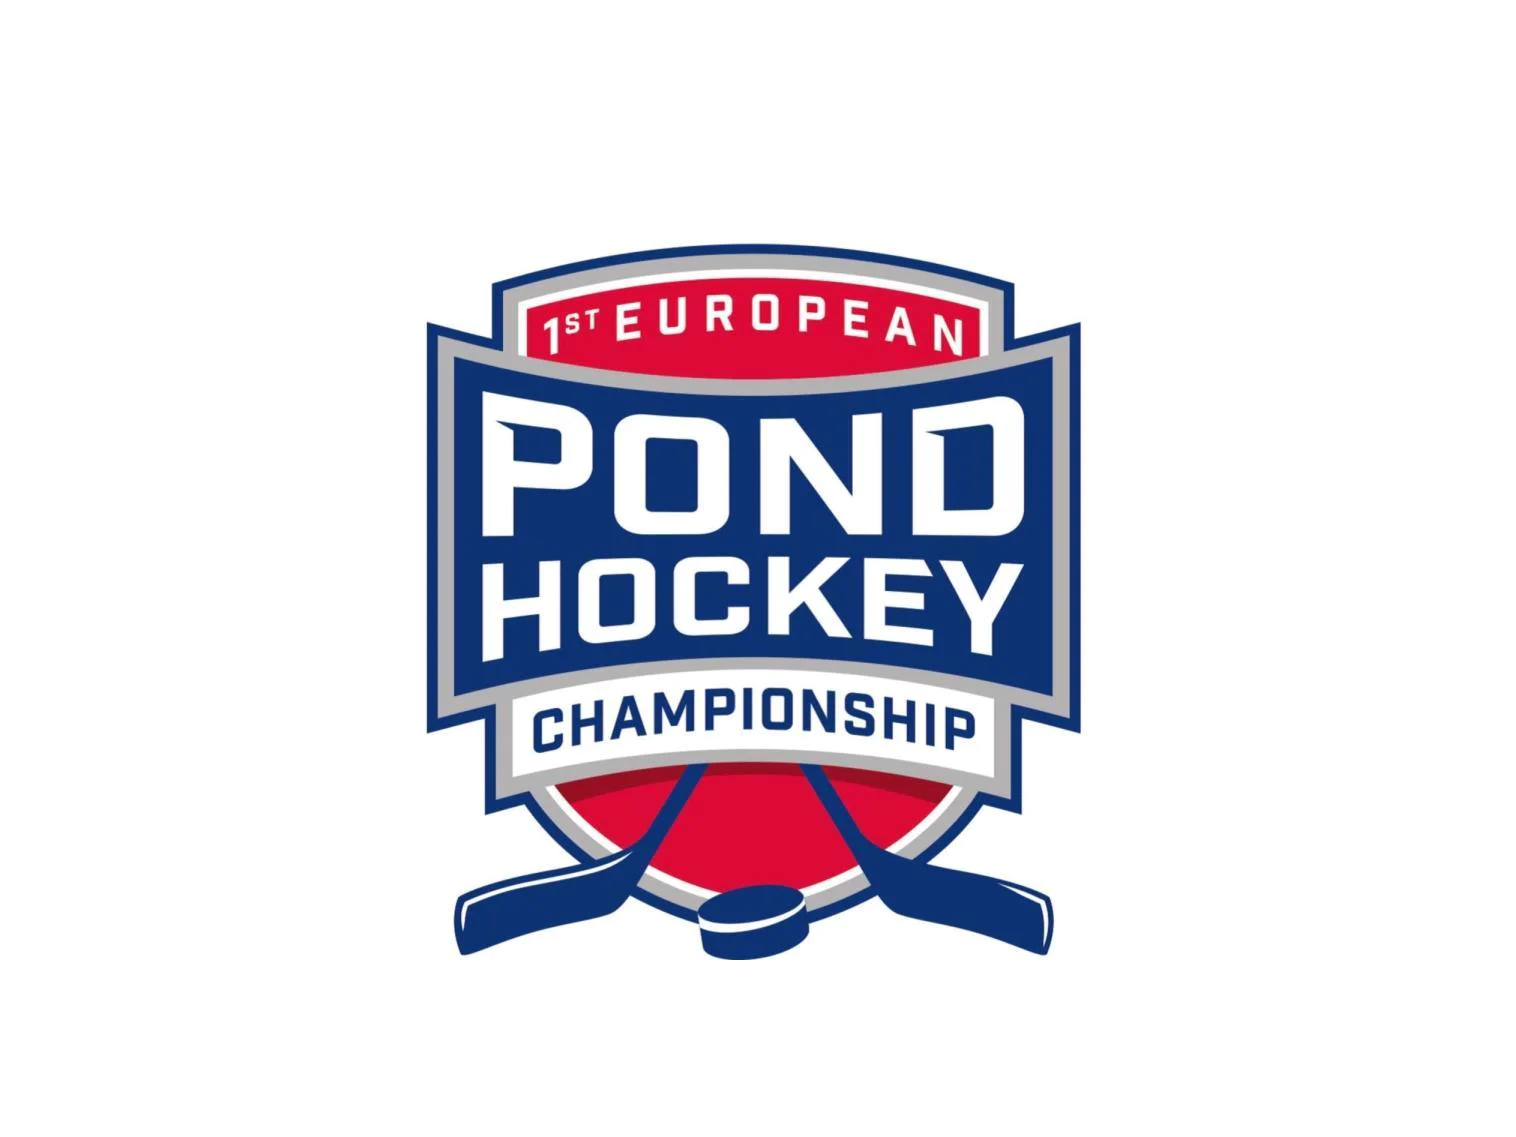 European Pond Hockey Championship Renon 3 suedtirol.info